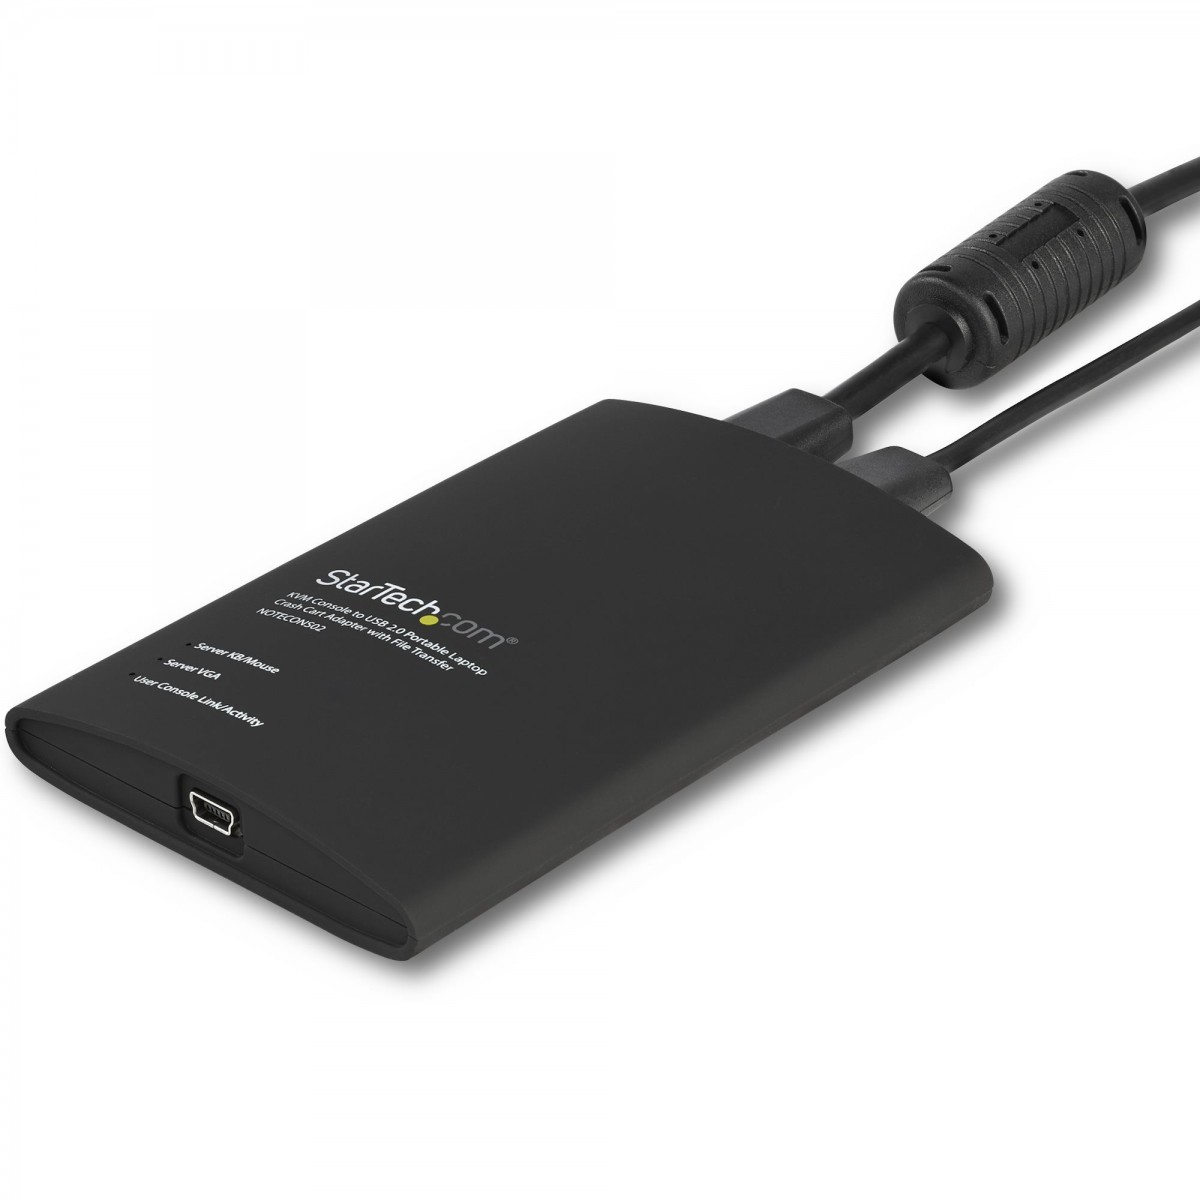 StarTech.com USB Crash Cart Adapter with File Transfer  Video Capture - 1920 x 1200 pixels - Full HD - Black